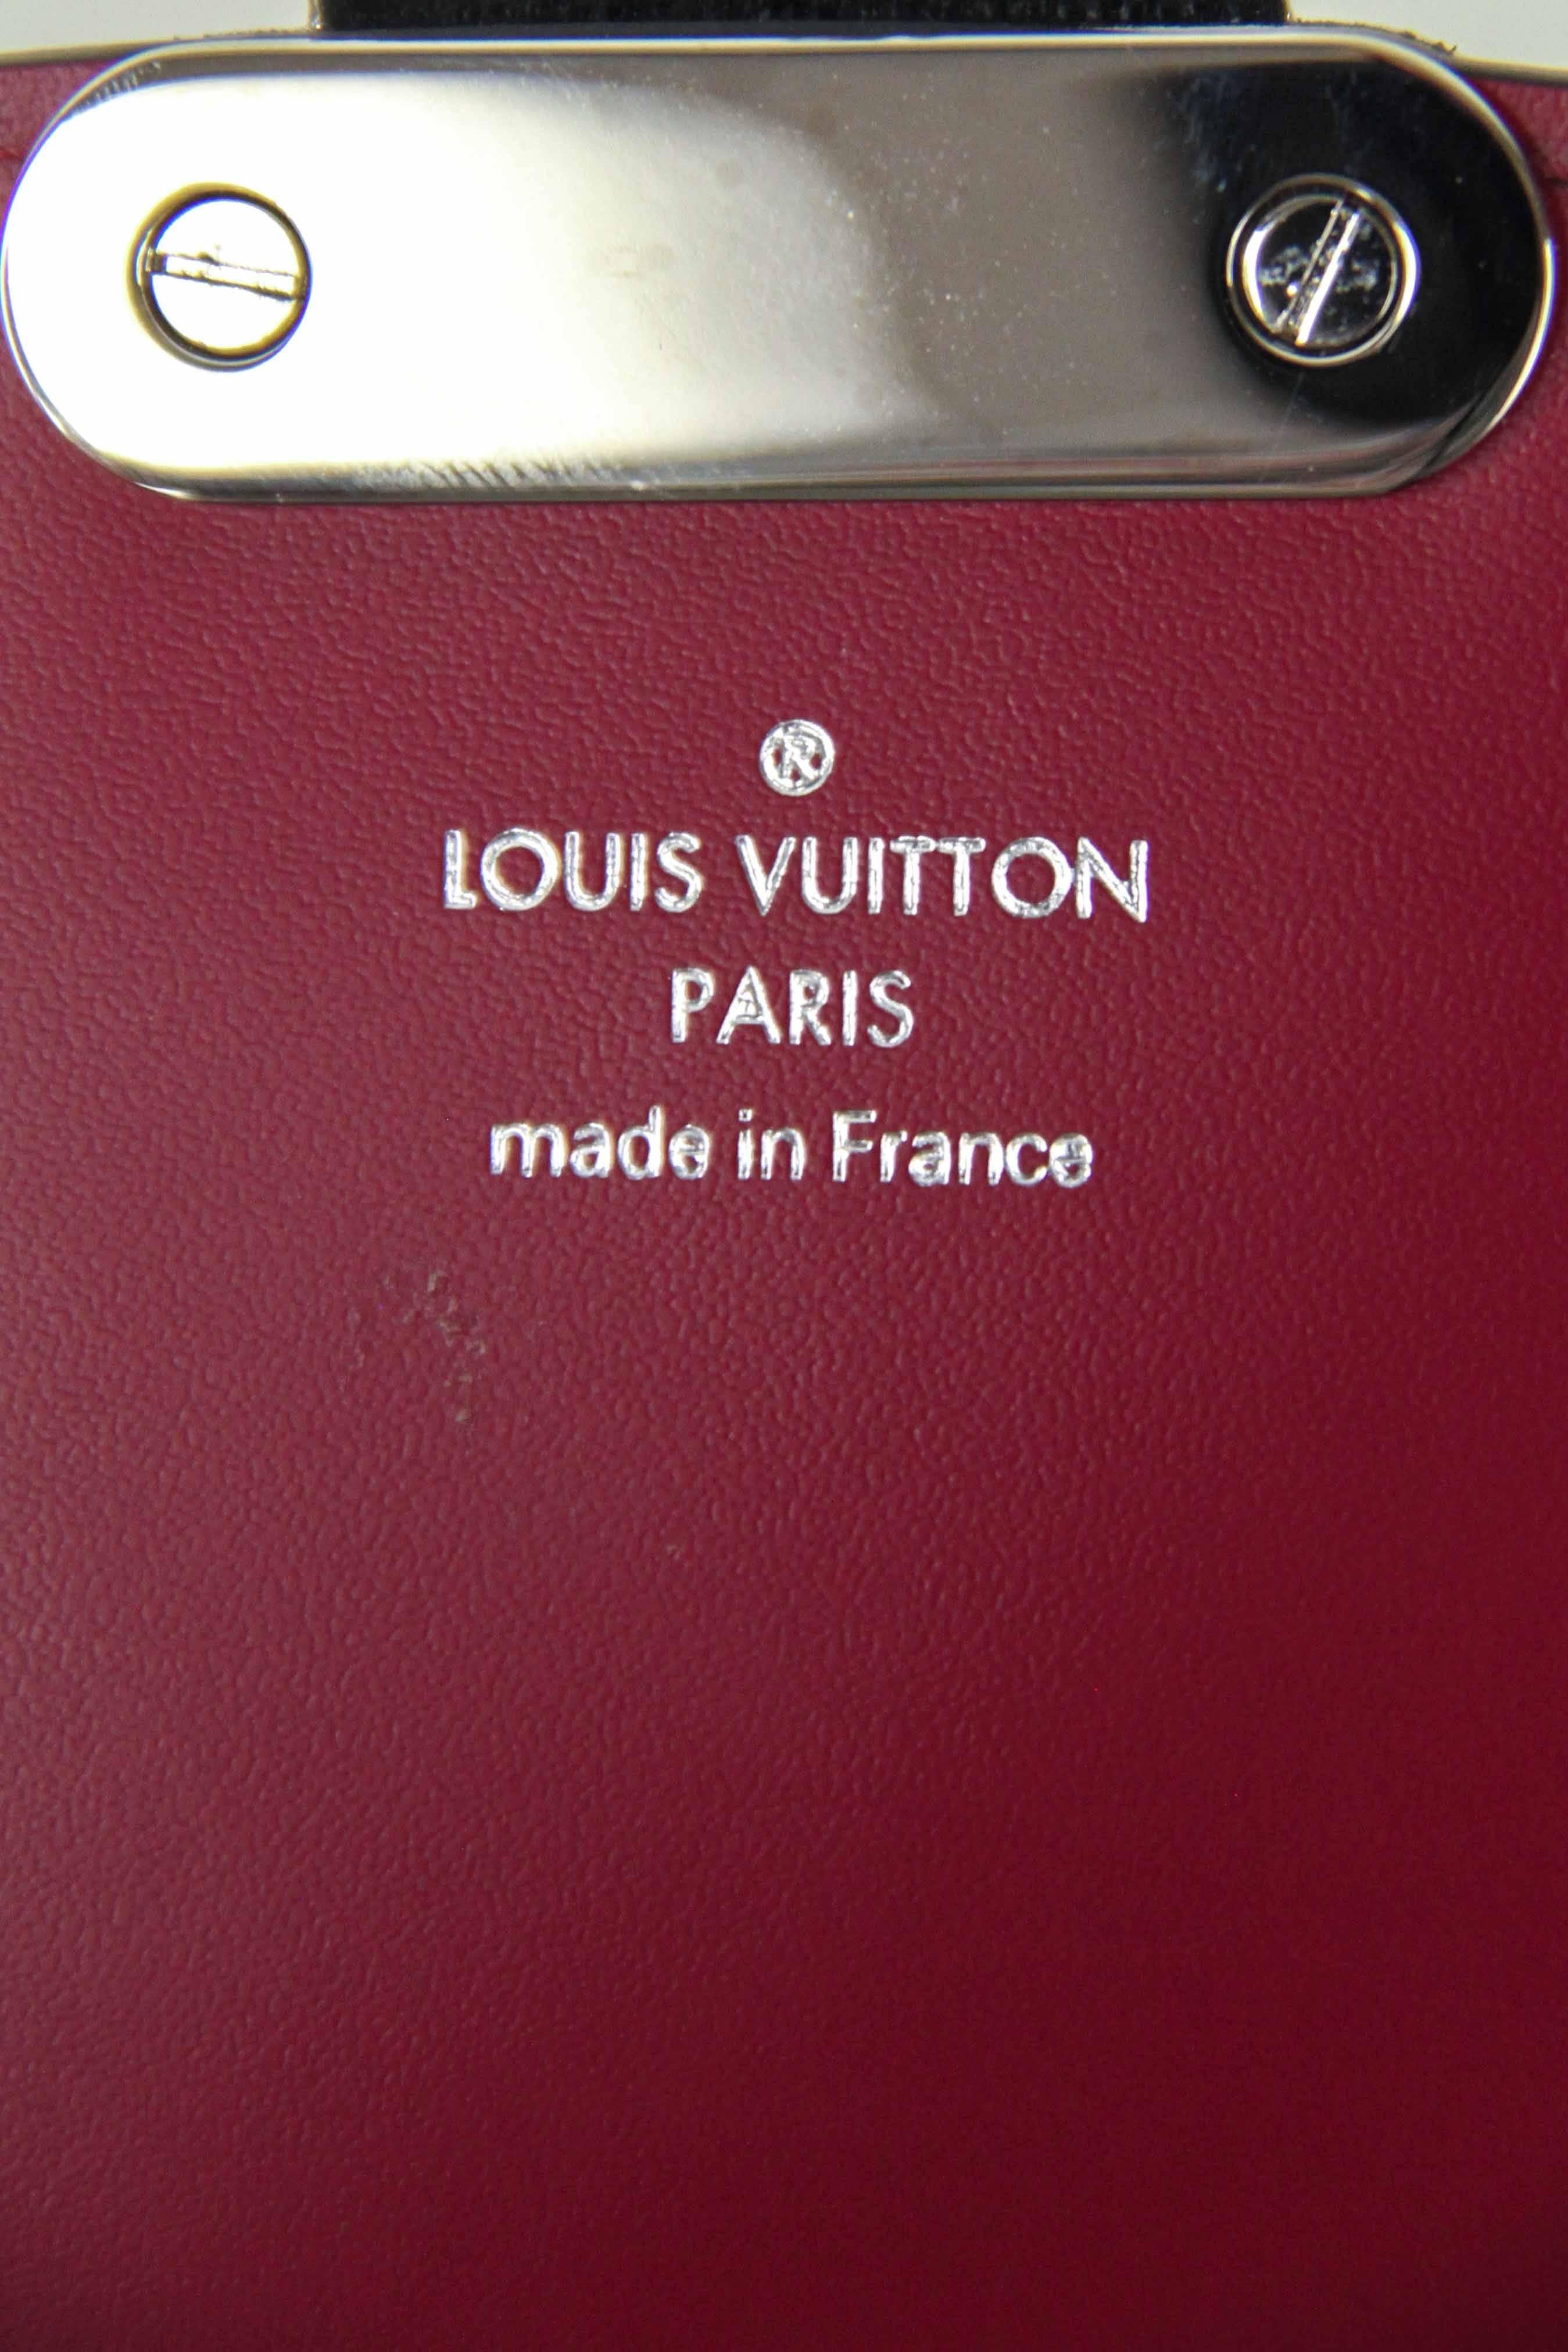 LOUIS VUITTON Eden Bag in Epi Leather  5